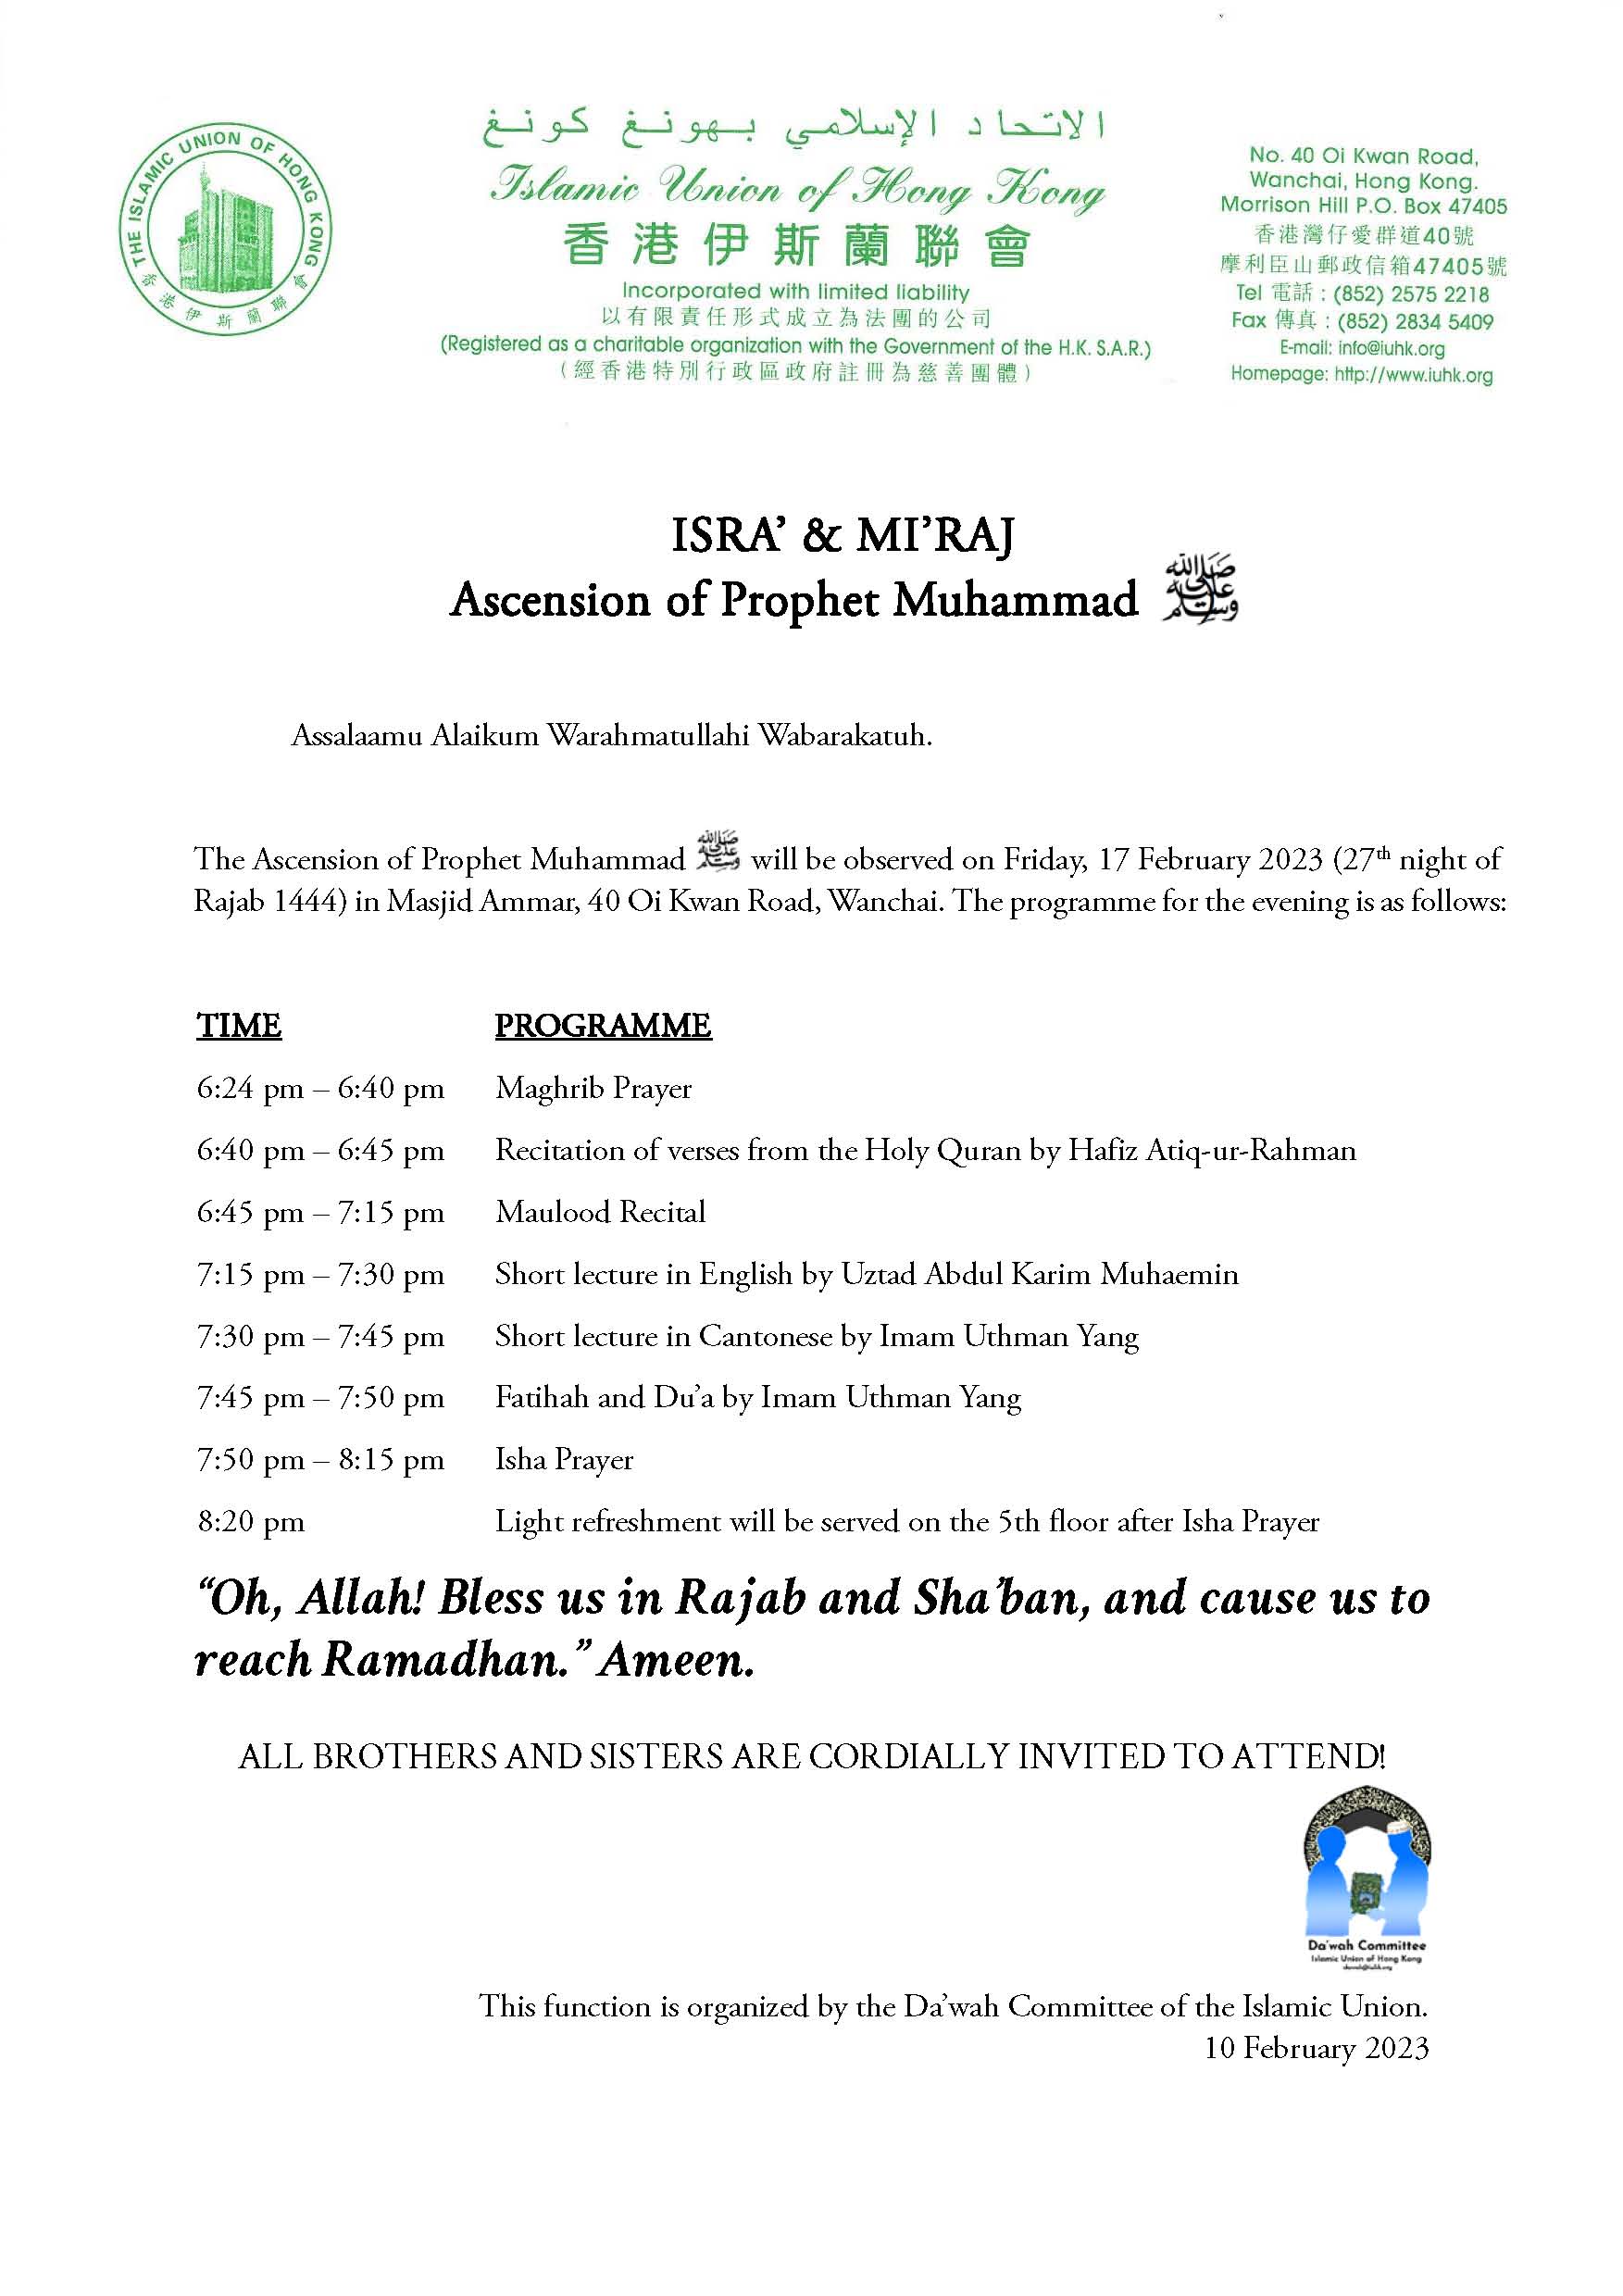 ISRA & MI'RAJ Ascension of Prophet Muhammad (SAW)